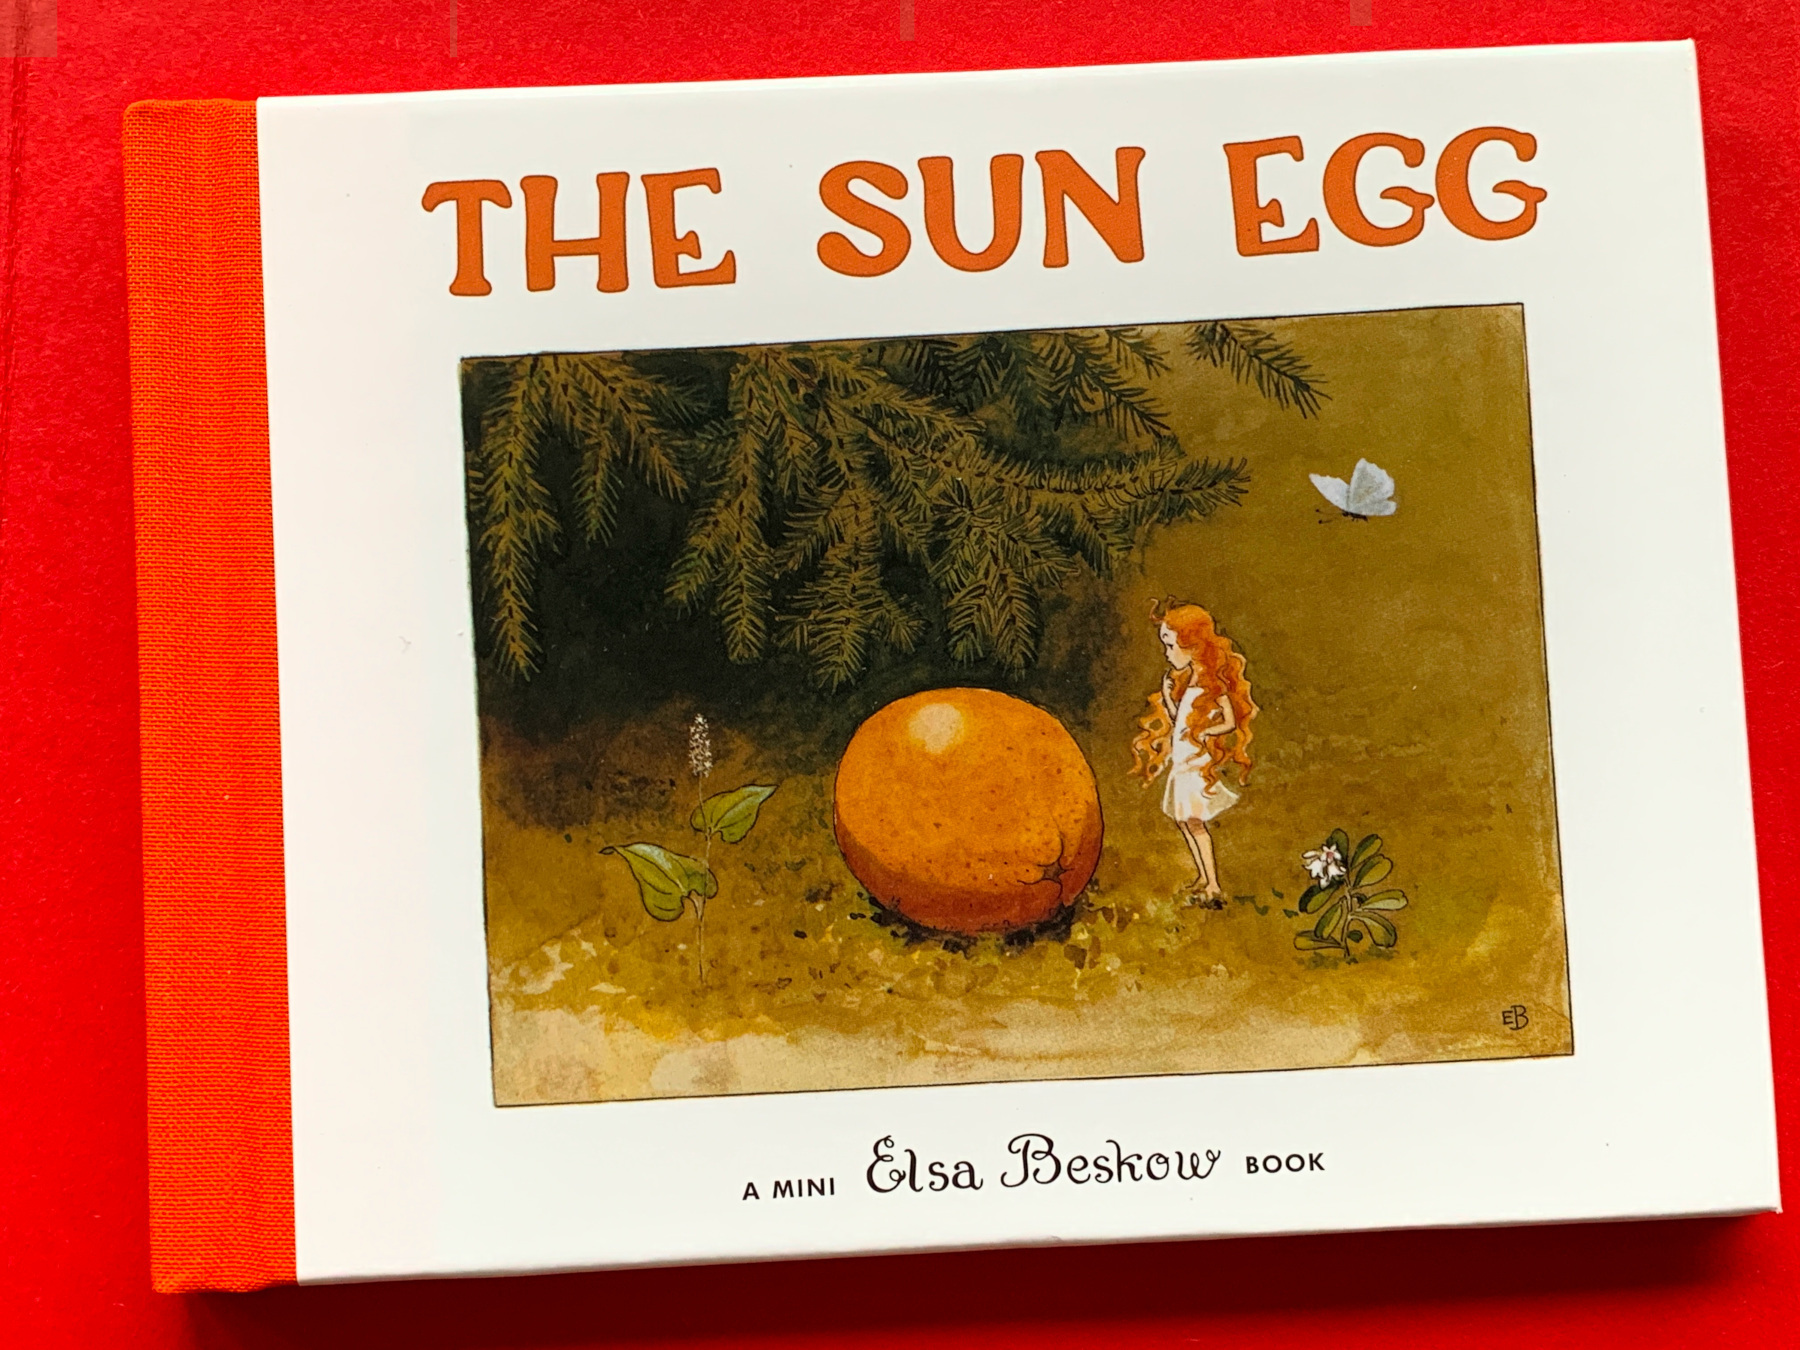 The sun egg homepage